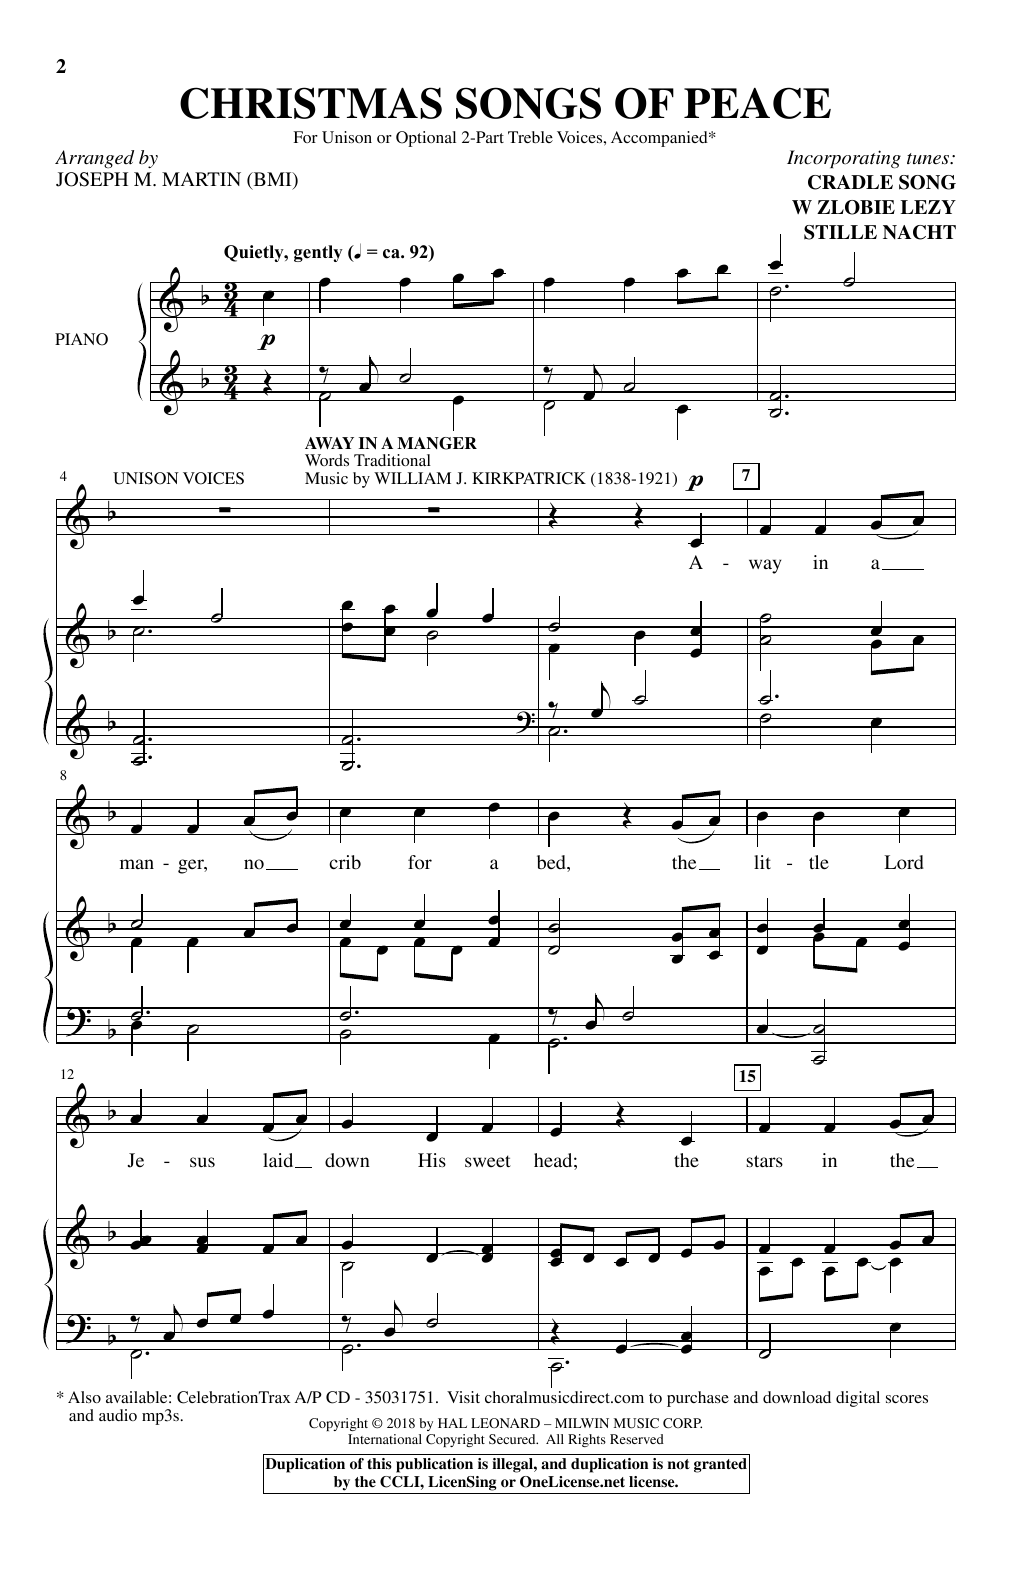 Download Joseph M. Martin Christmas Songs Of Peace Sheet Music